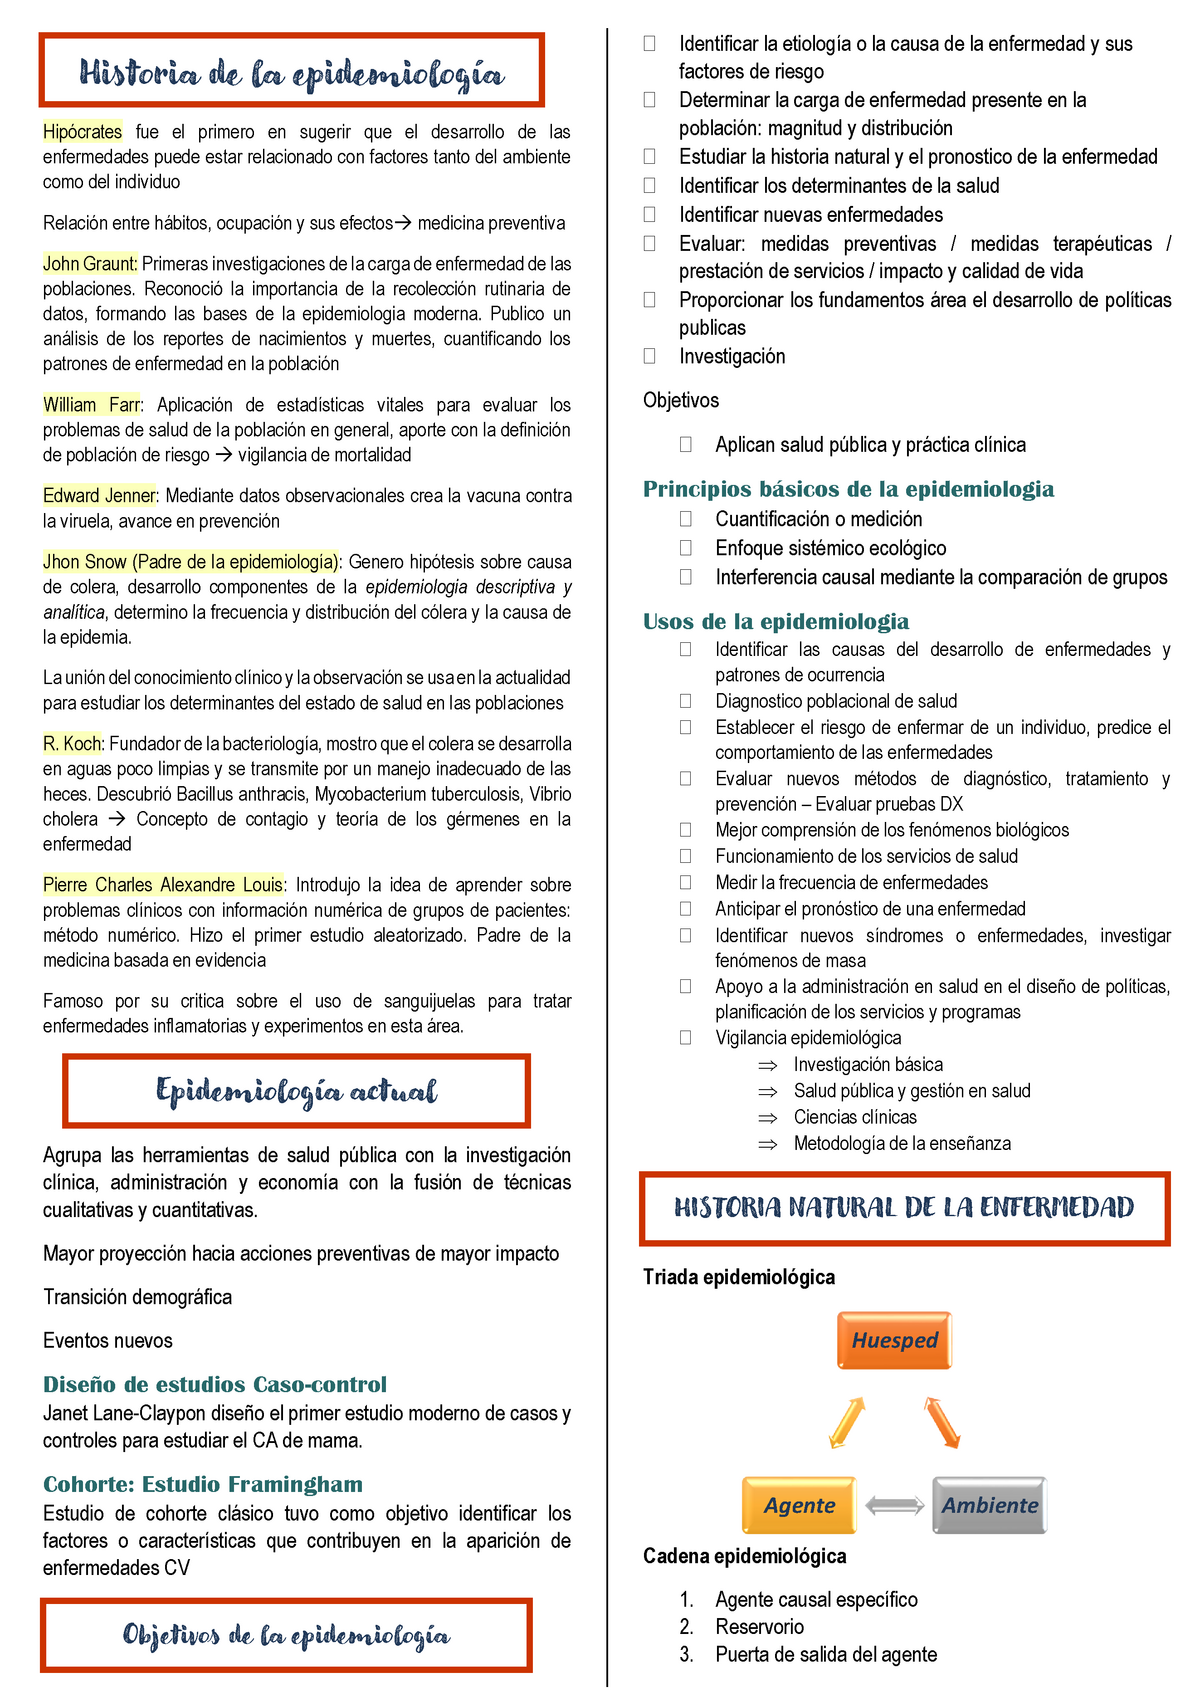 Epidemiologia examen I - MH305 - UNSAAC - StuDocu